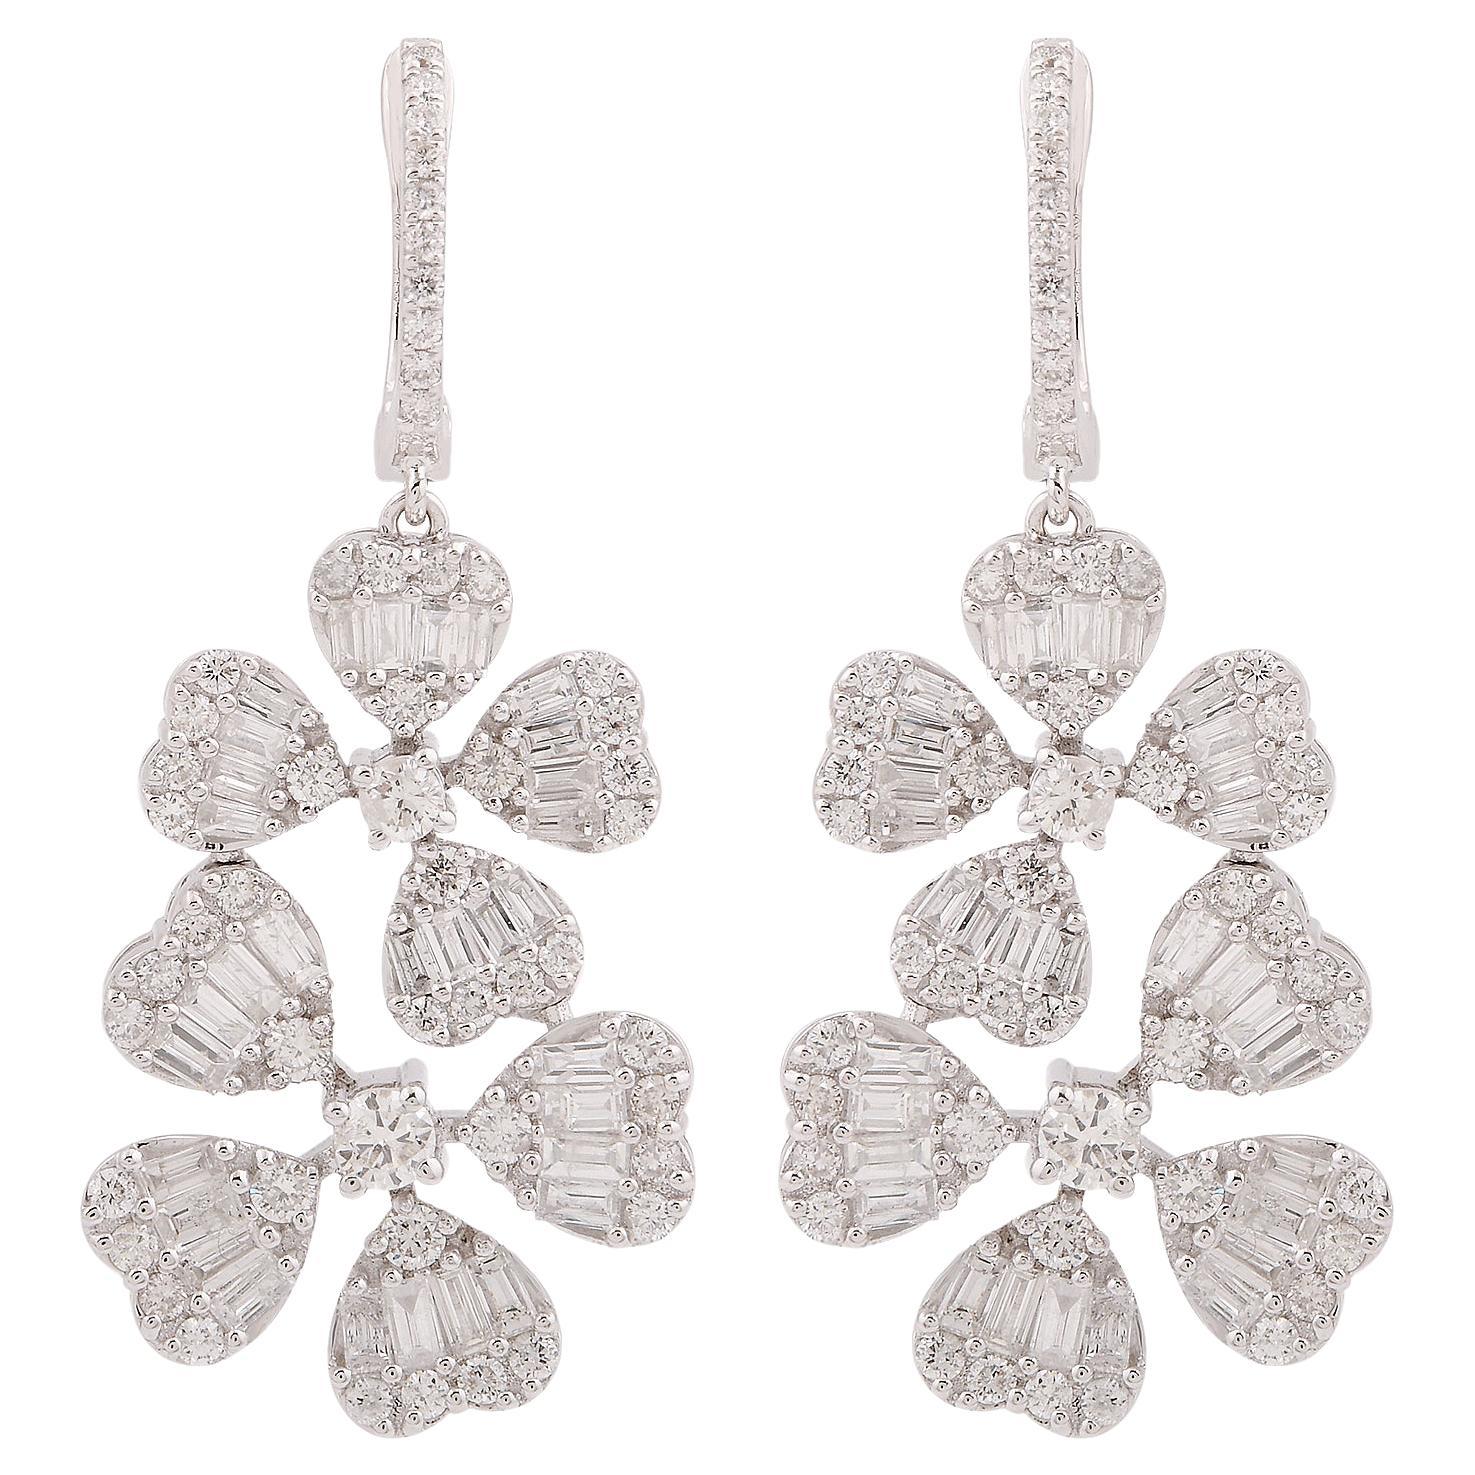 2.4 Carat SI Clarity HI Color Diamond Multi Heart Dangle Earrings 18k White Gold